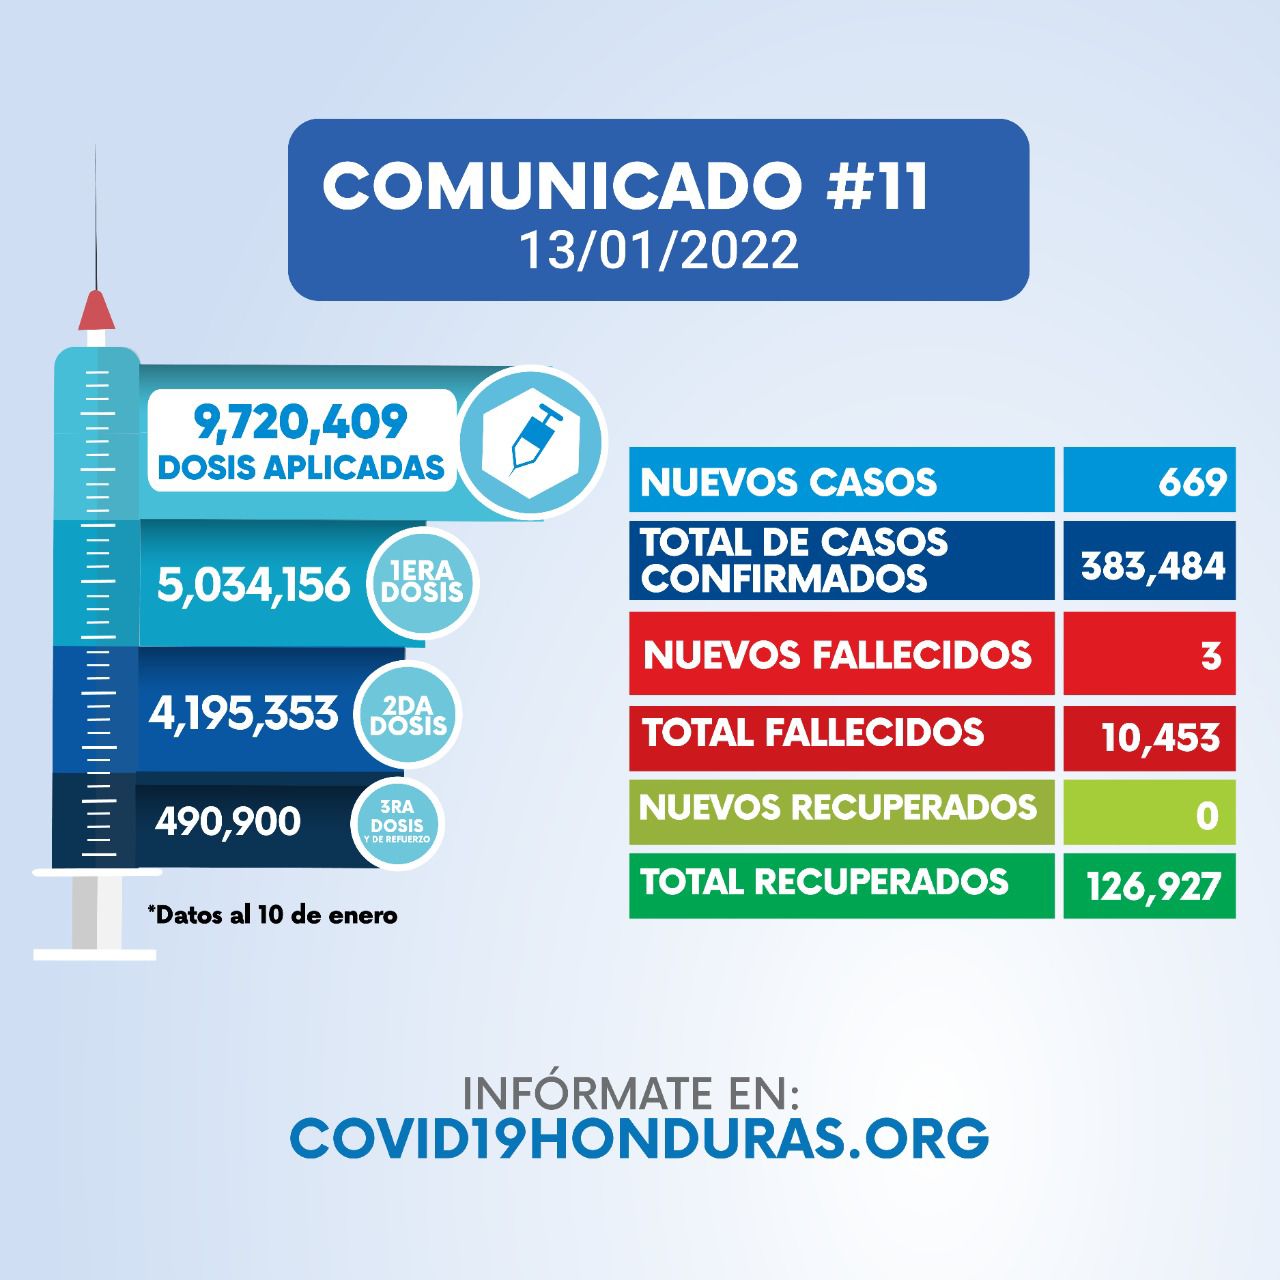 Honduras, 383,484' contagios de COVID-19'